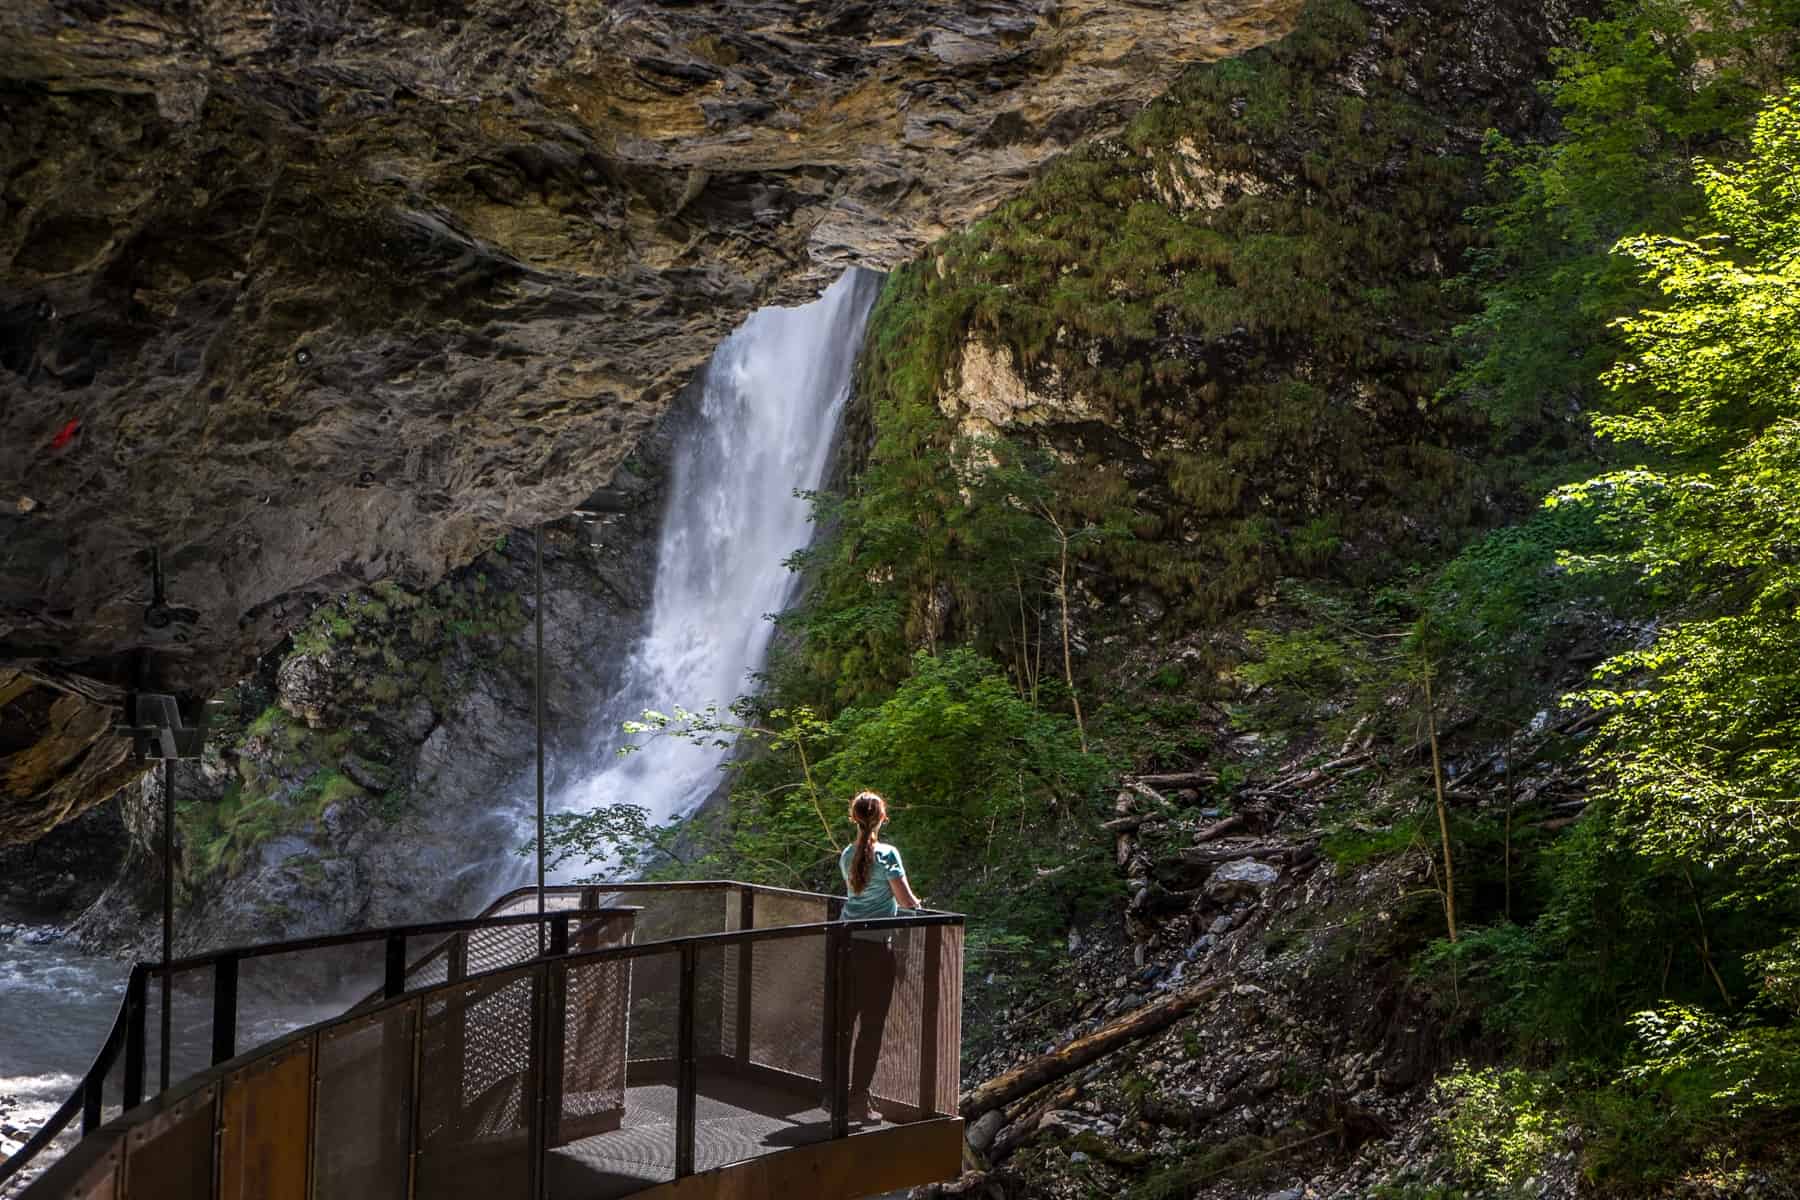 A woman in a blue t-shirt stands on an iron viewing platform looking towards a gushing waterfall in the Liechtensteinklamm gorge in St. Johann im Pongau Austria